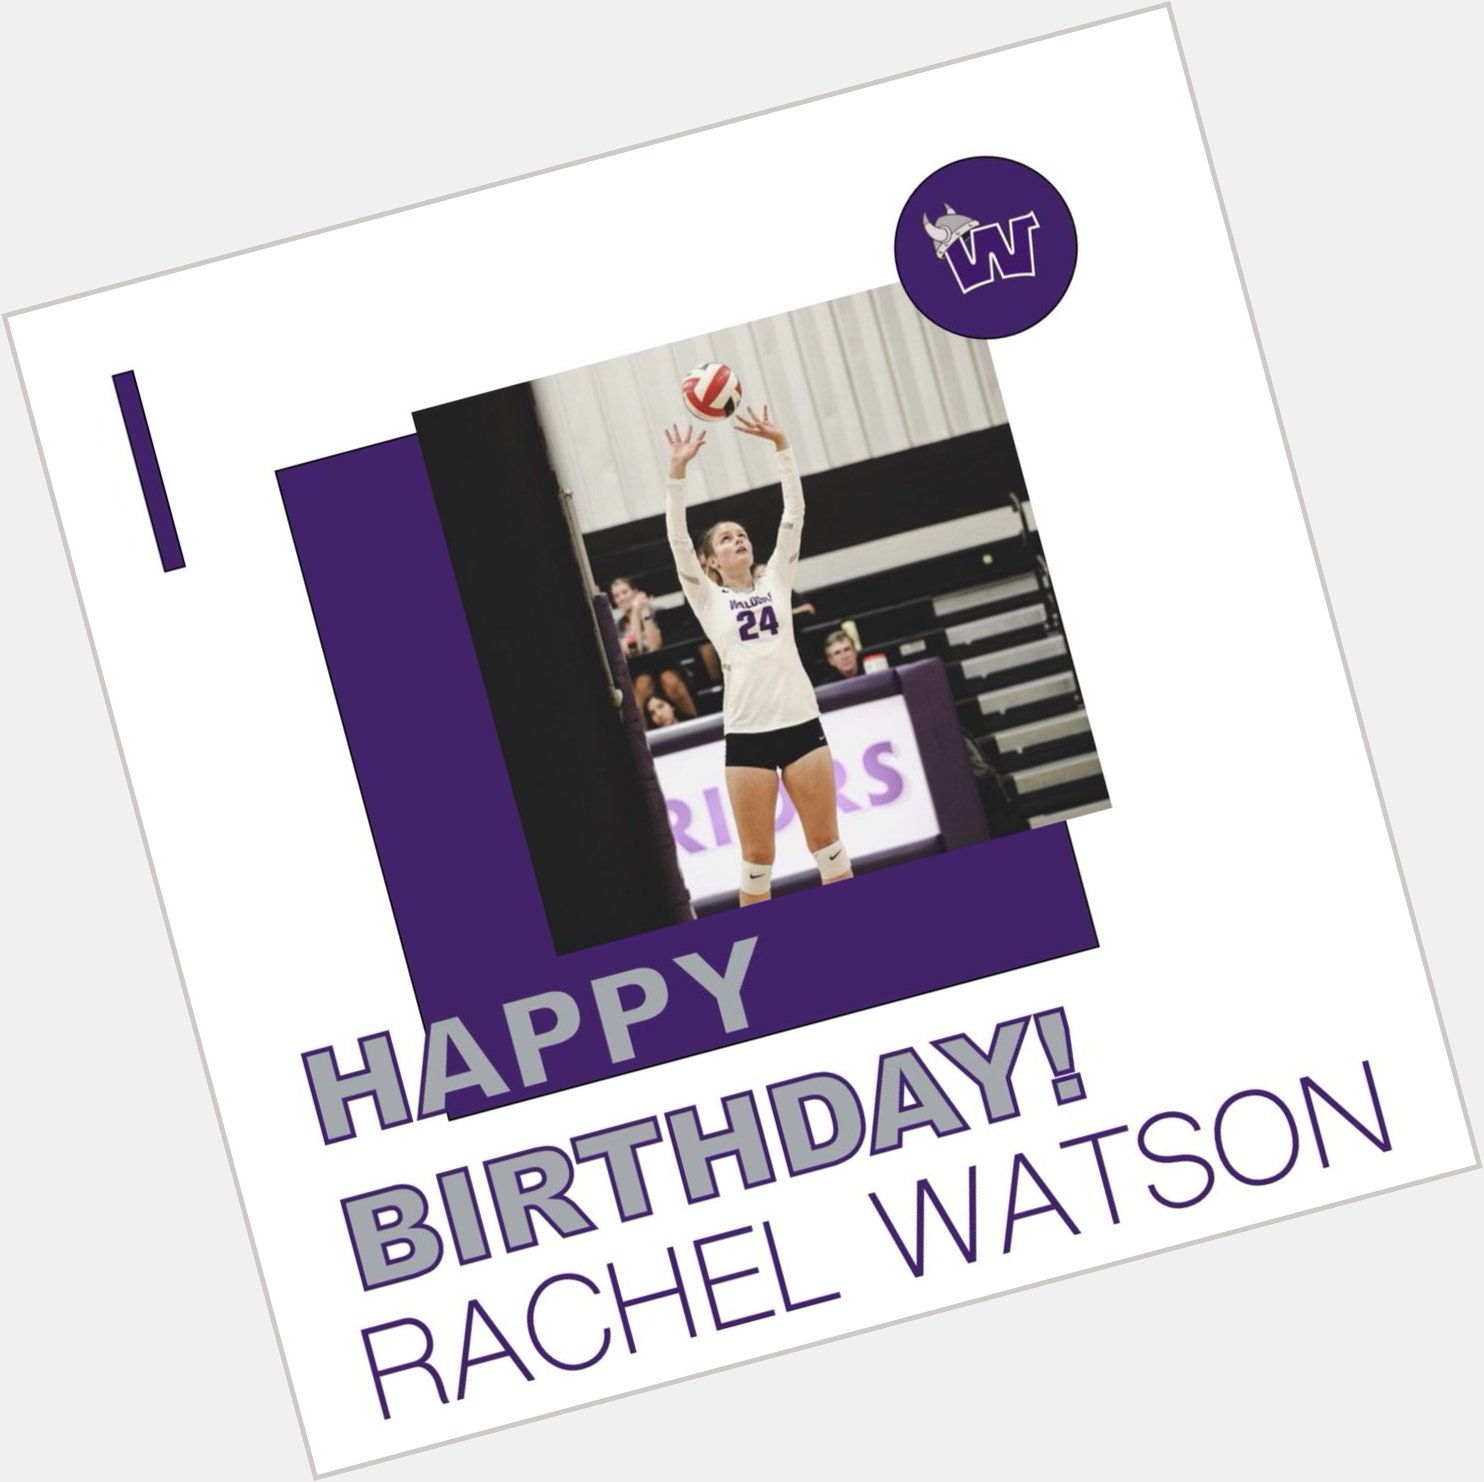 Happy Birthday to Freshman Rachel Watson!  